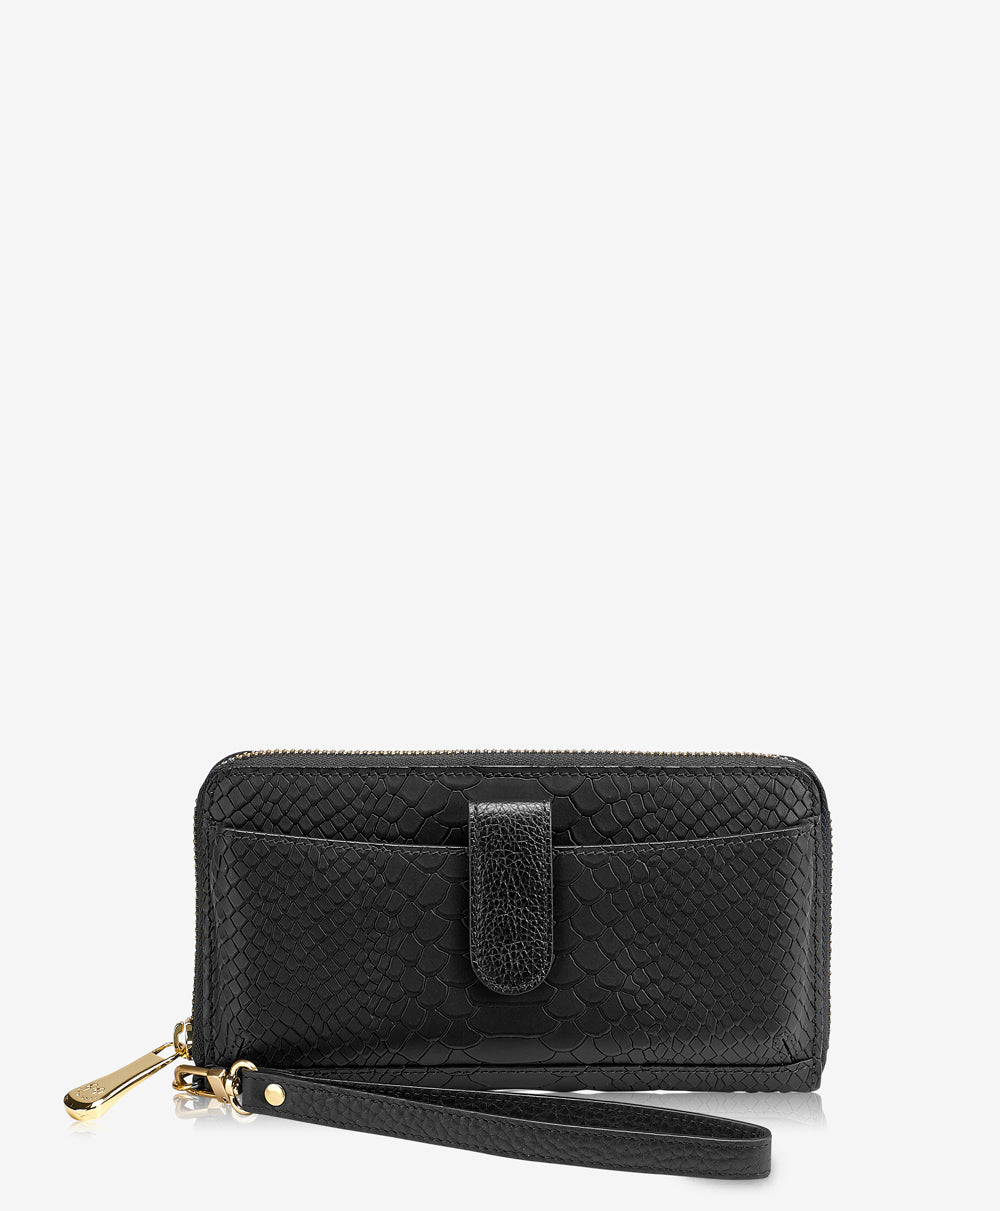 GiGi New York City Phone Wallet Black Embossed Python Leather